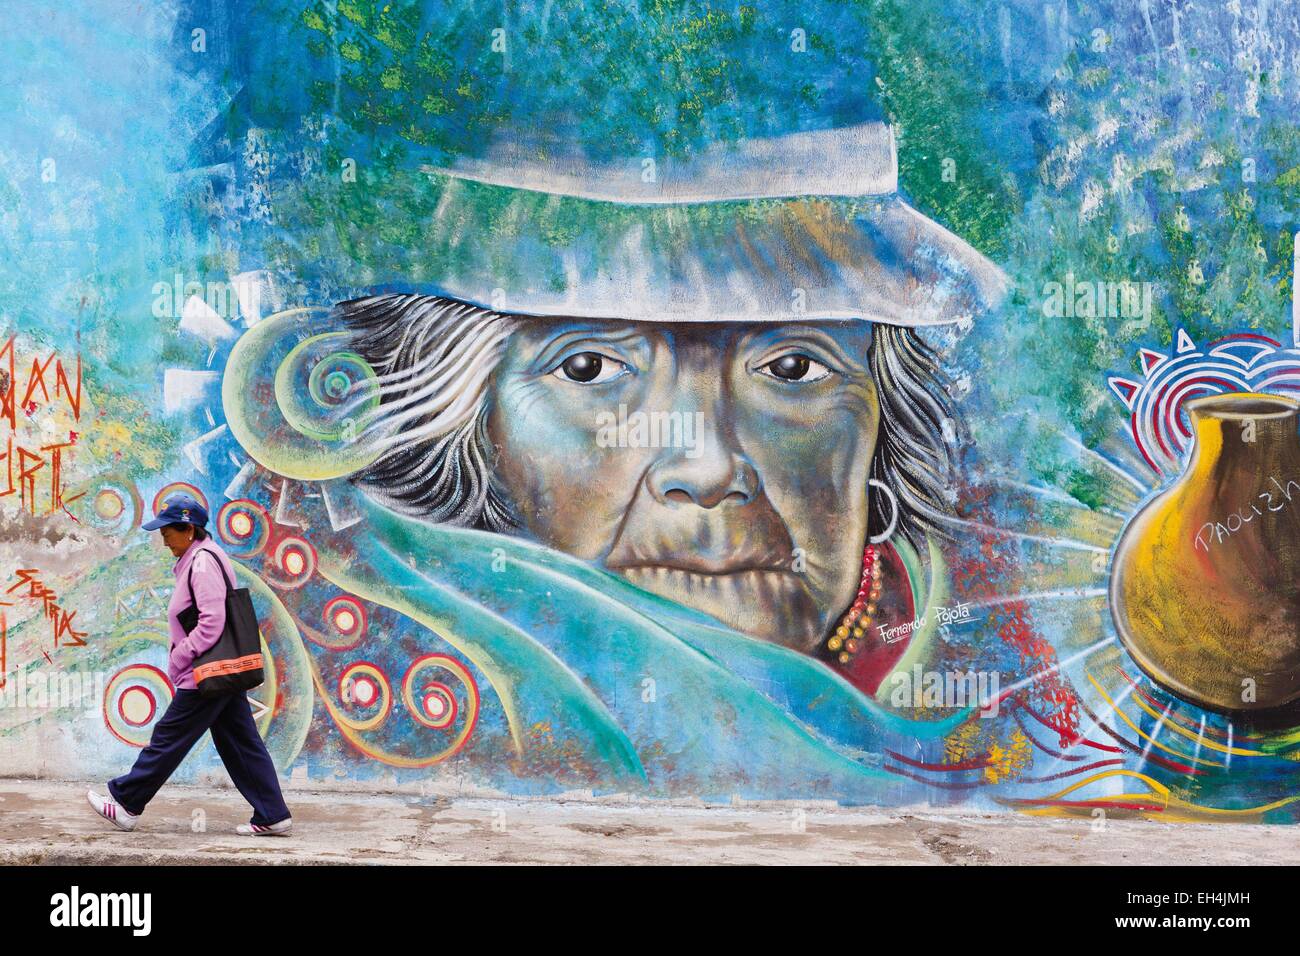 Ecuador, Imbabura, Atuntaqui, Ecuadorian busy modern woman in front of a wall graffiti depicting a traditional Andean woman Stock Photo